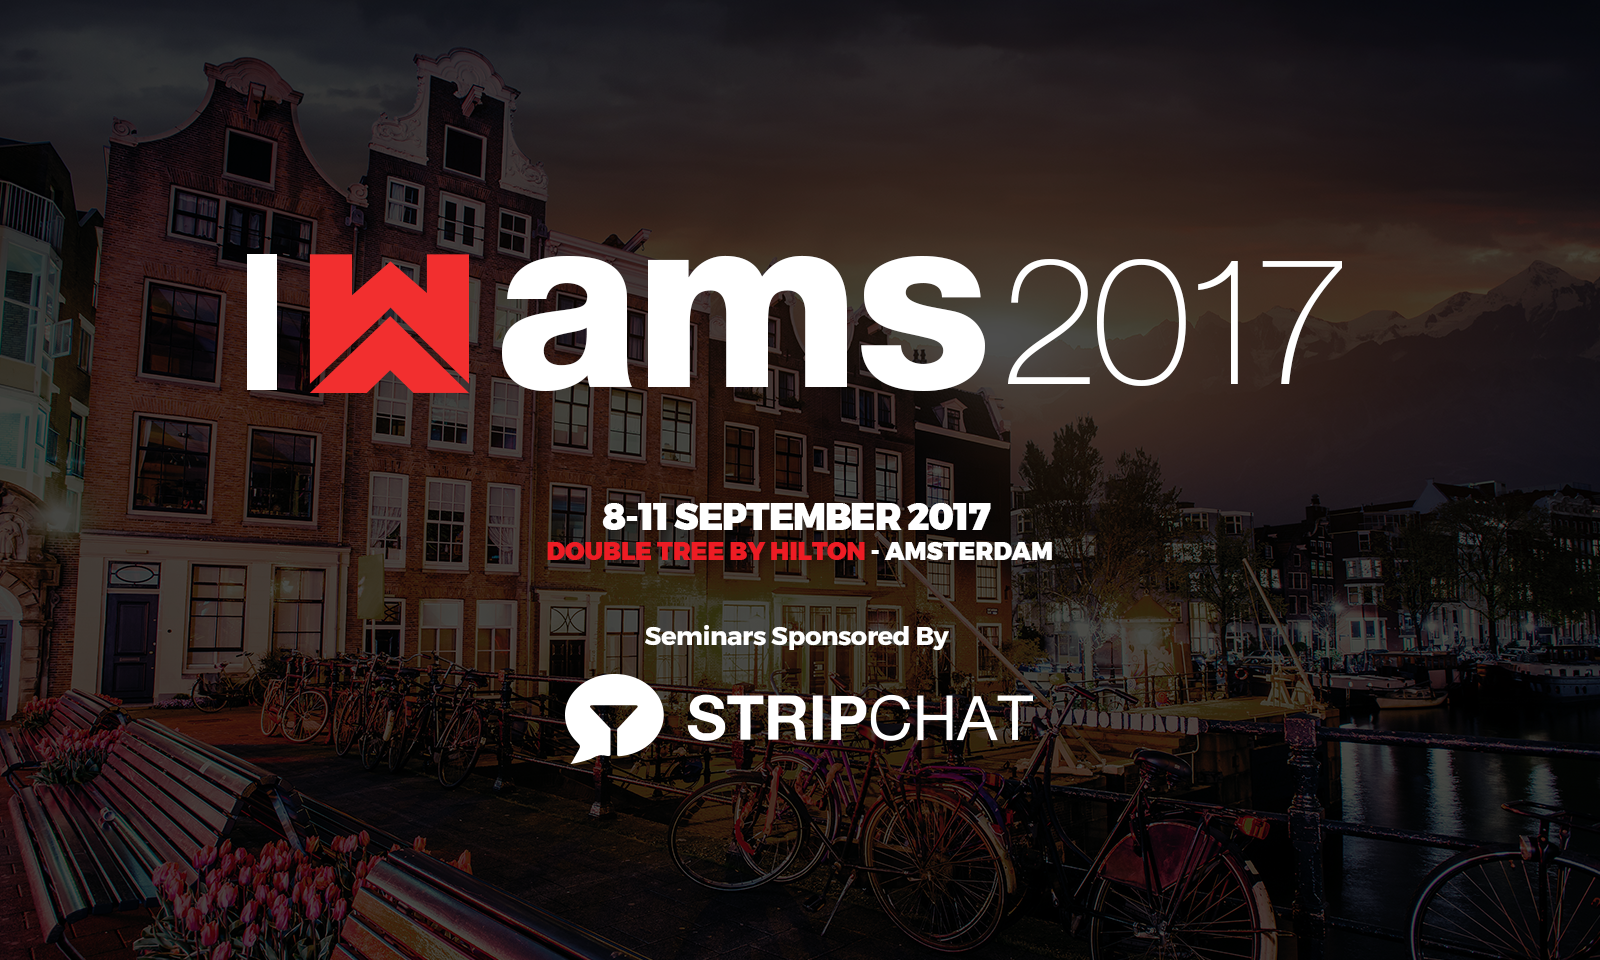 Webmaster Access Amsterdam Seminar Speakers Announced